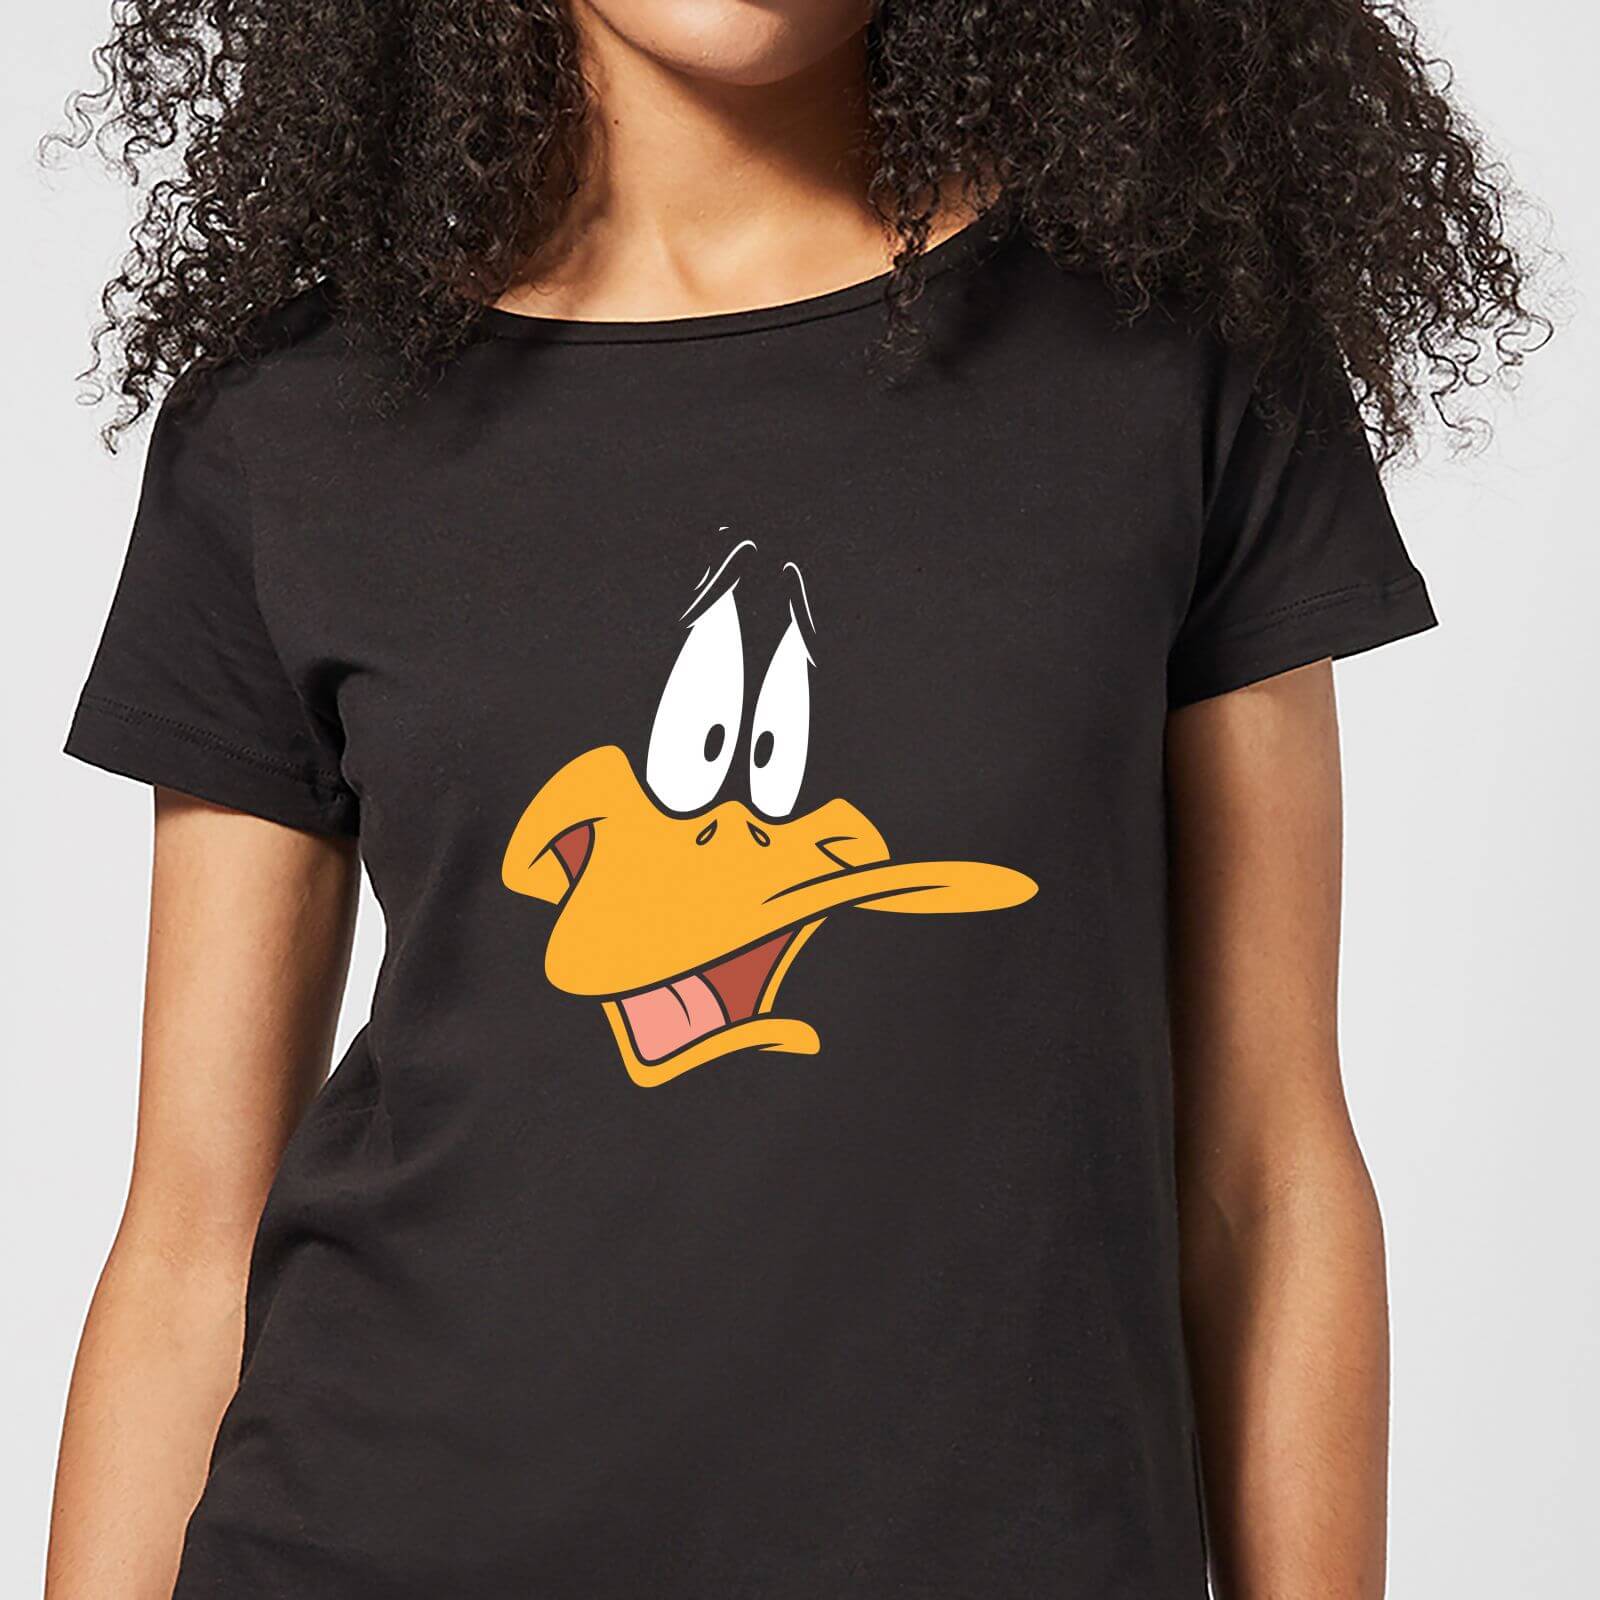 Looney Tunes Daffy Duck Face Women's T-Shirt - Black - 4XL - Black